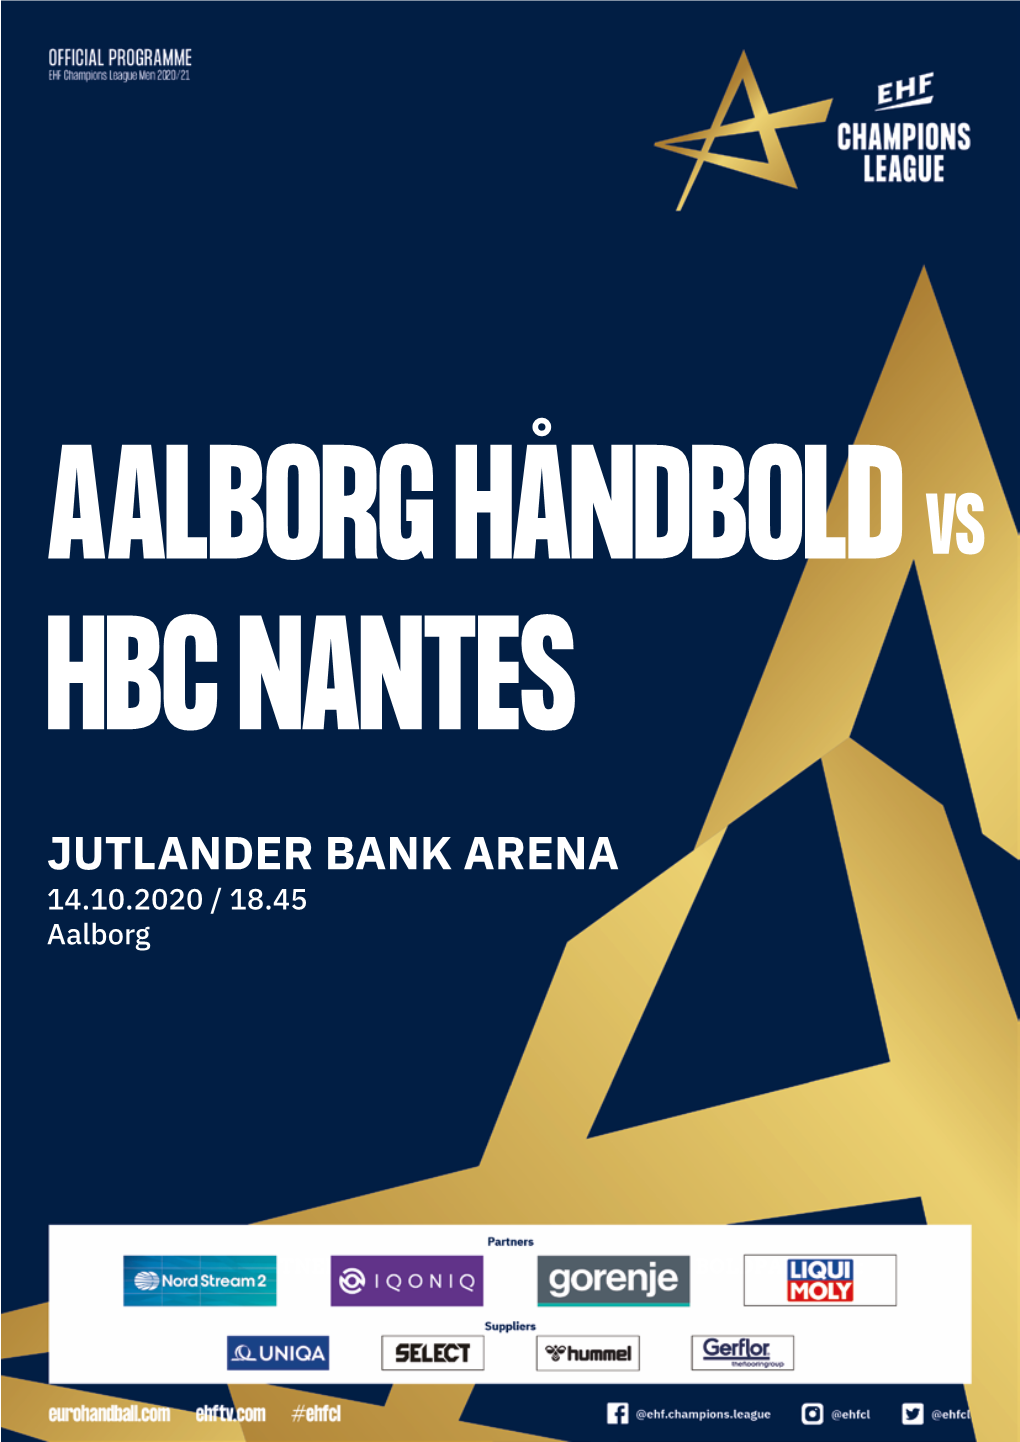 JUTLANDER BANK ARENA 14.10.2020 / 18.45 Aalborg